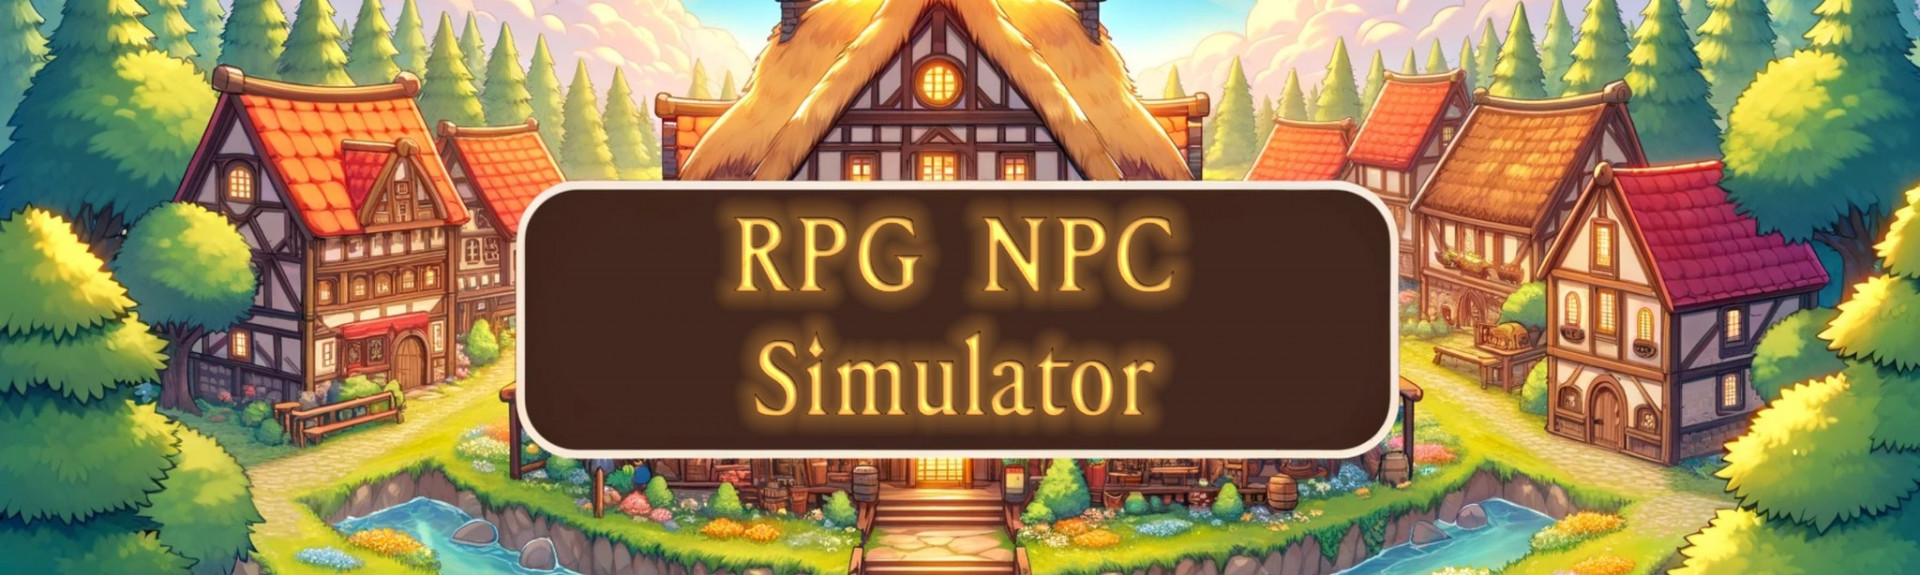 RPG NPC Simulator